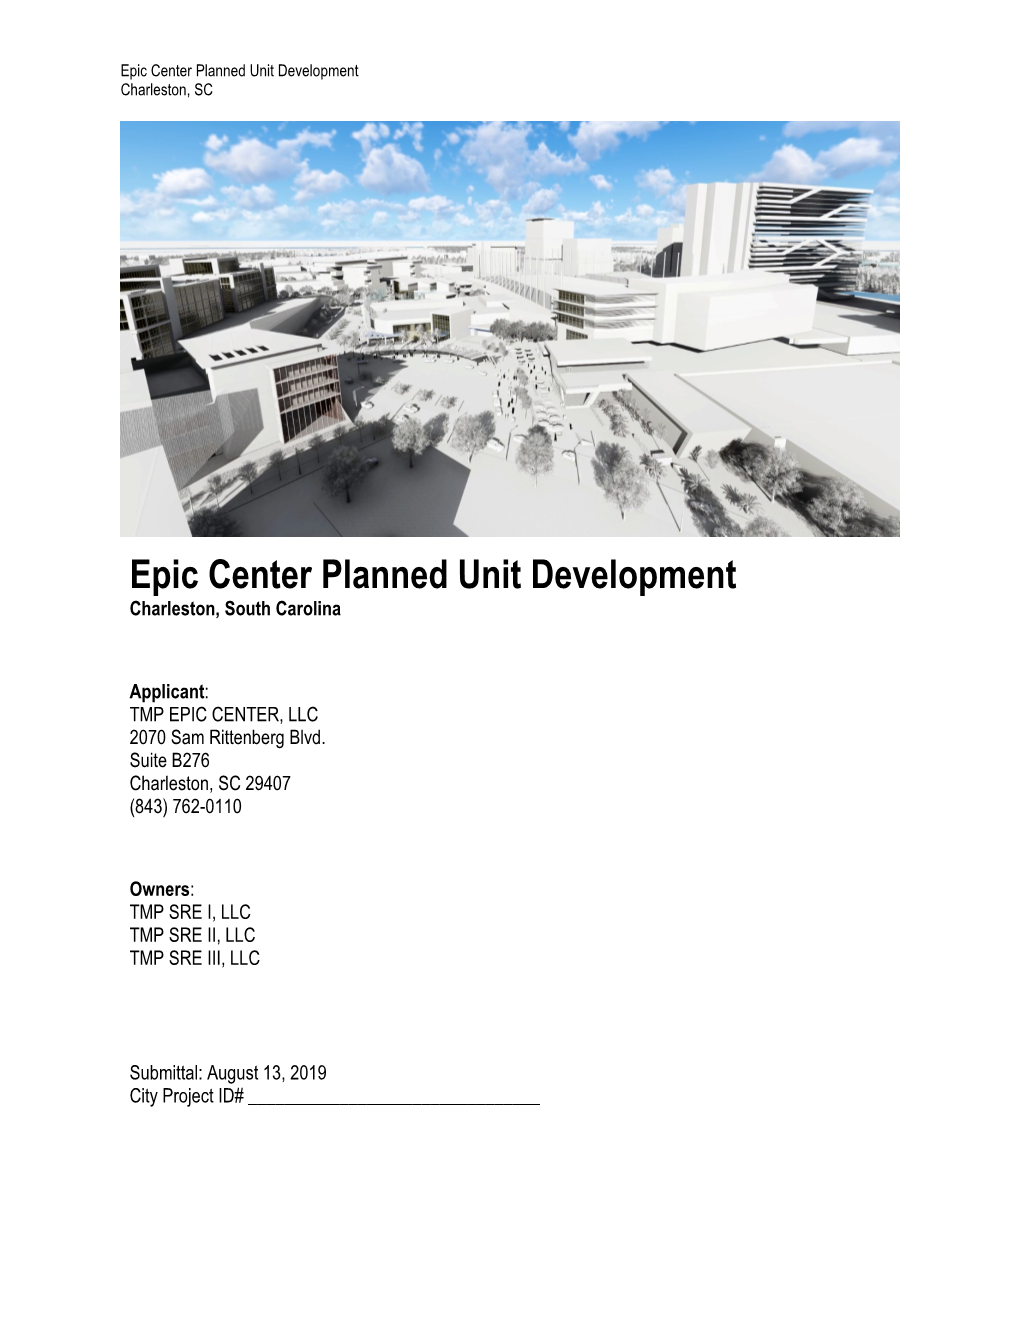 Epic Center Planned Unit Development Charleston, SC